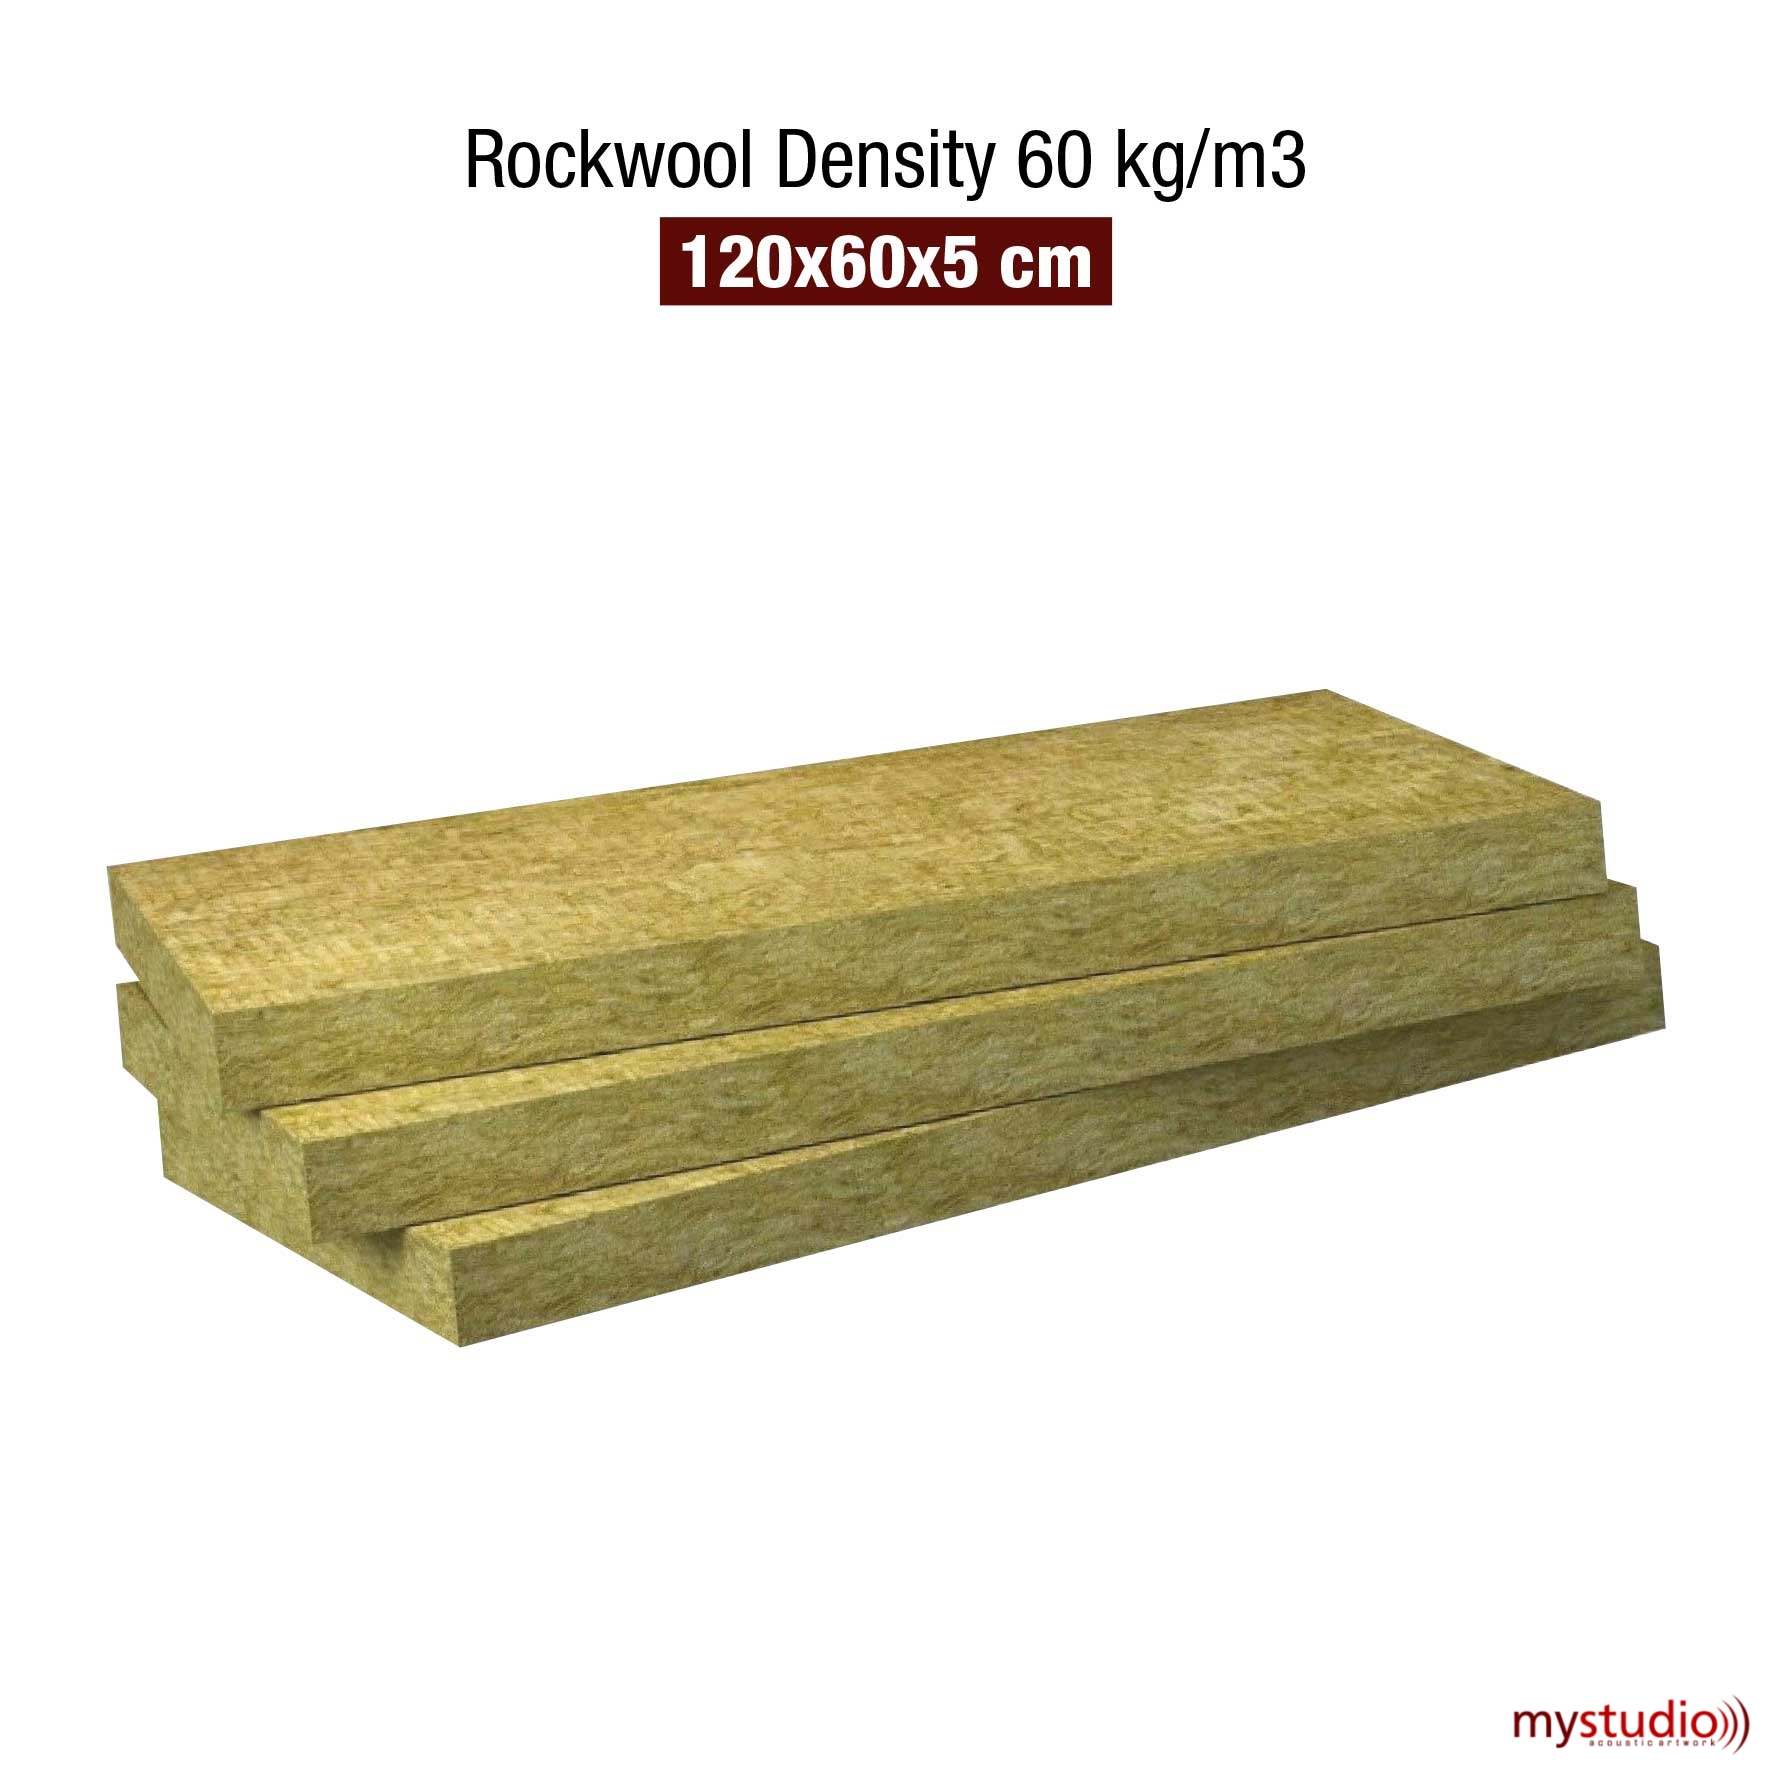 Rockwool Density 60 kg/m3 - Produk Mystudio